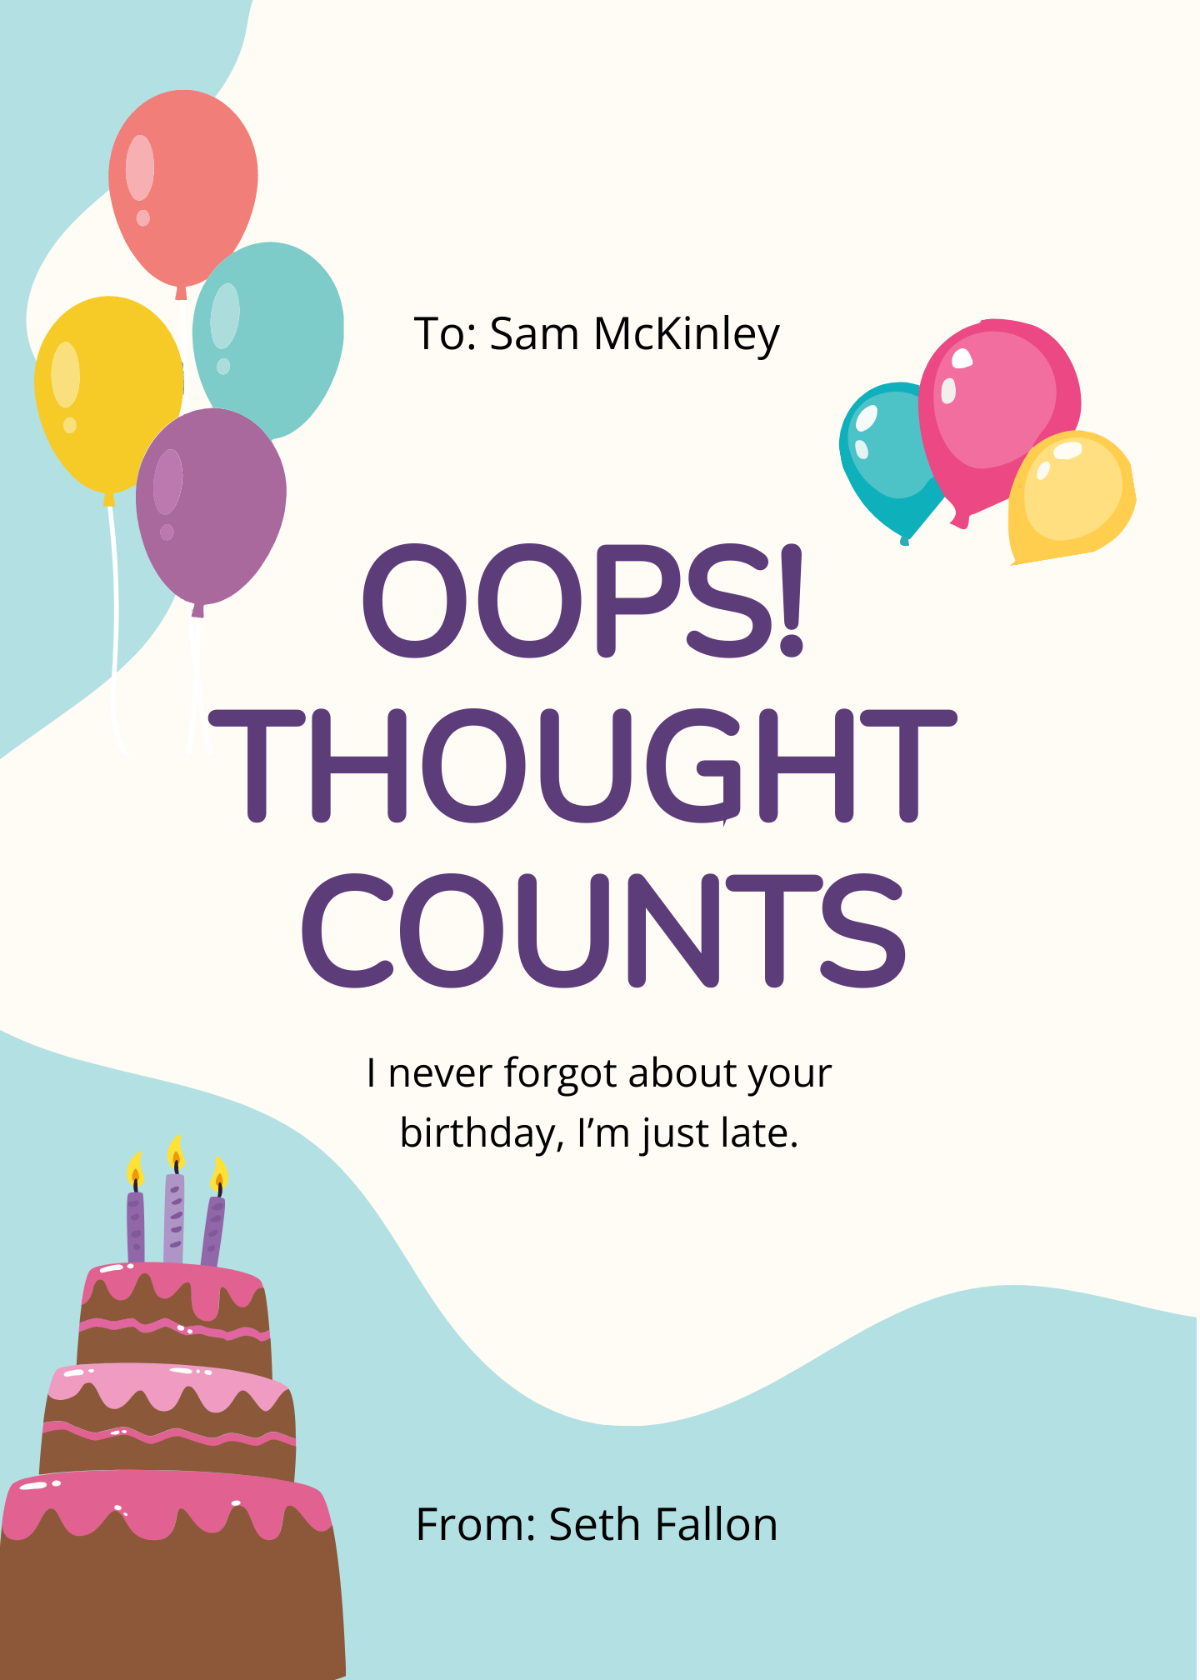 Funny Belated Birthday Card